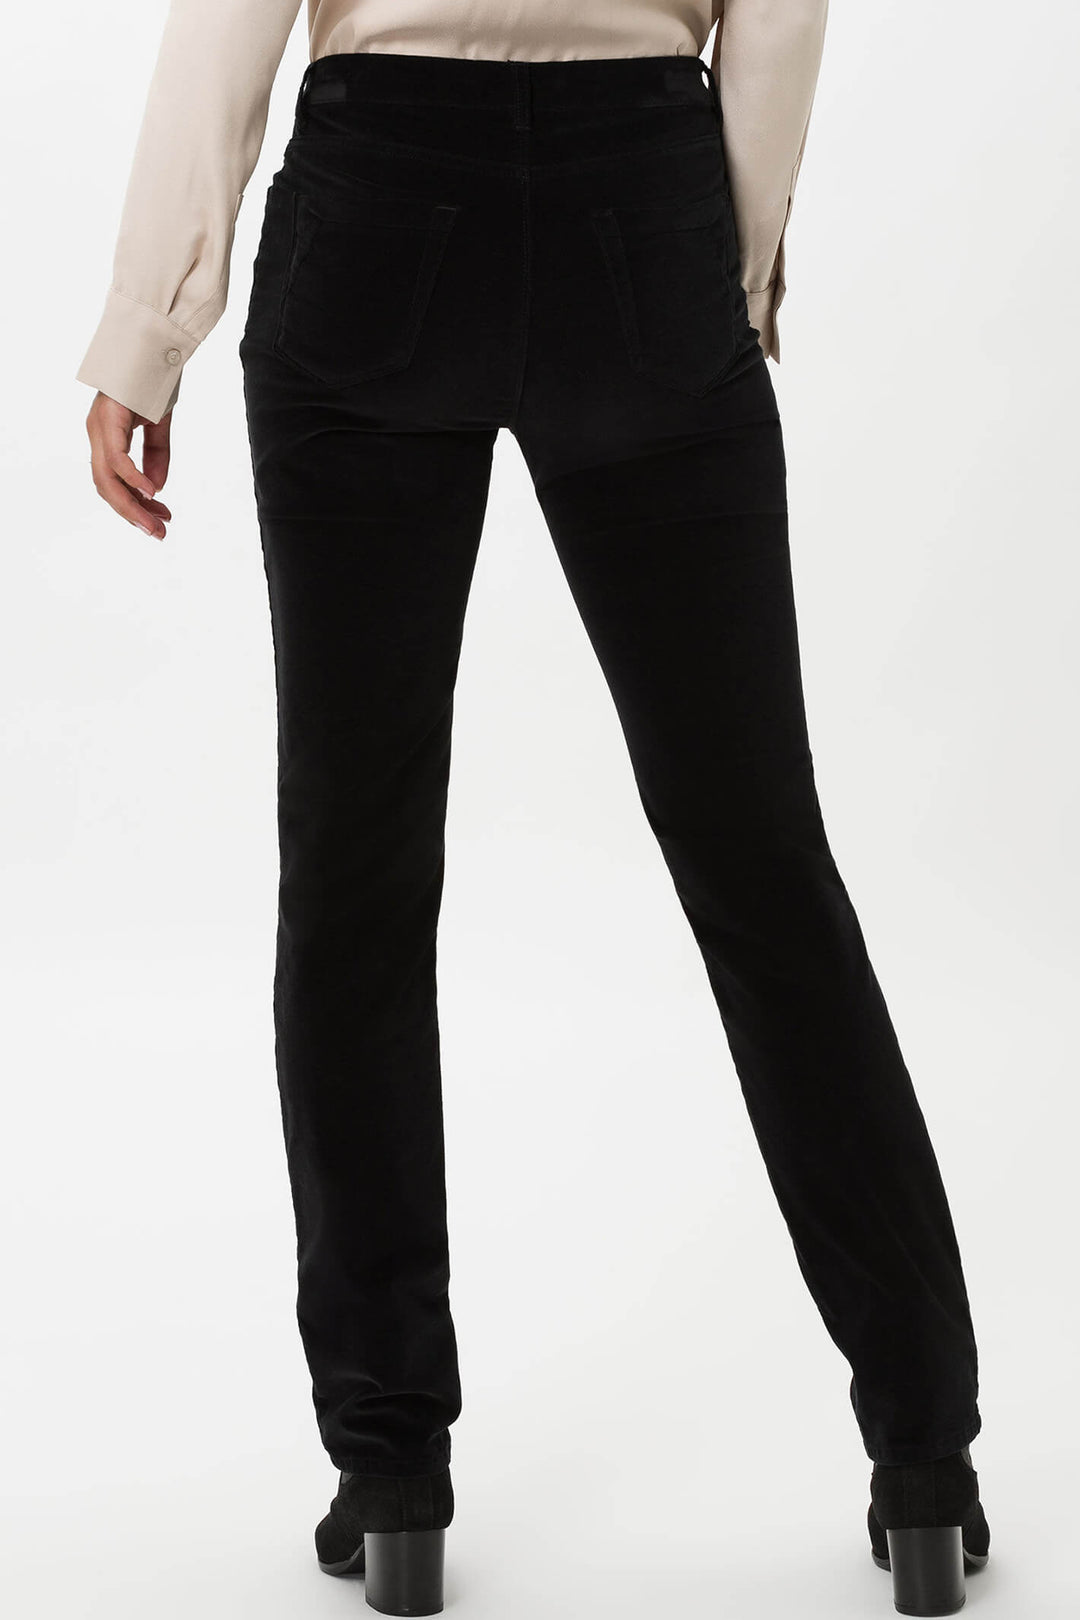 Brax Carola 75-1037 02 Black Velvet Motion Jeans - Shirley Allum Boutique